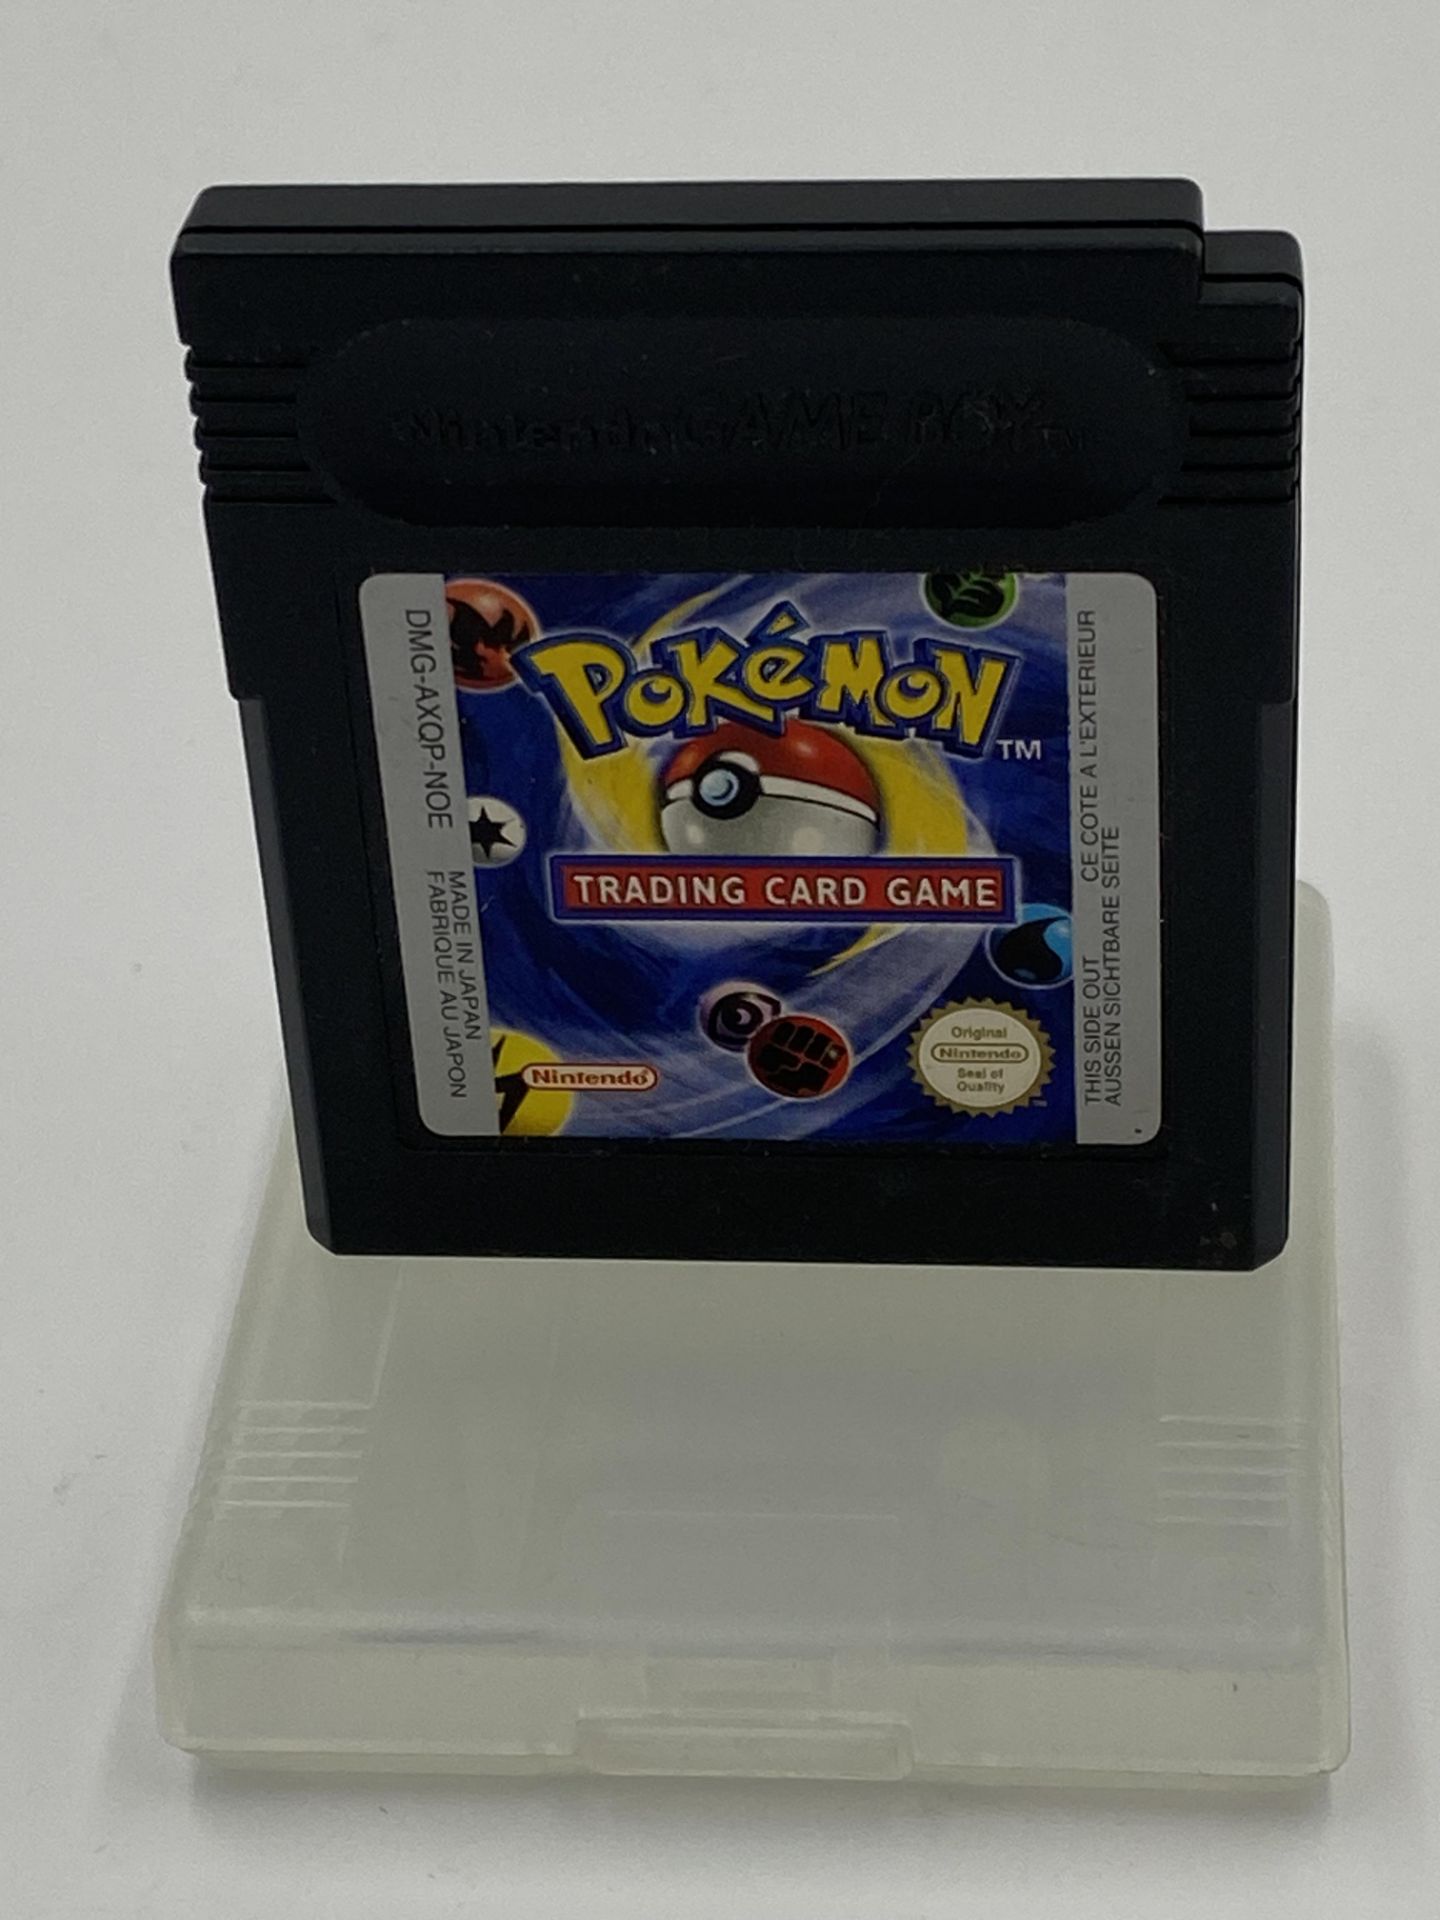 Nintendo Game Boy Pokemon trading card game